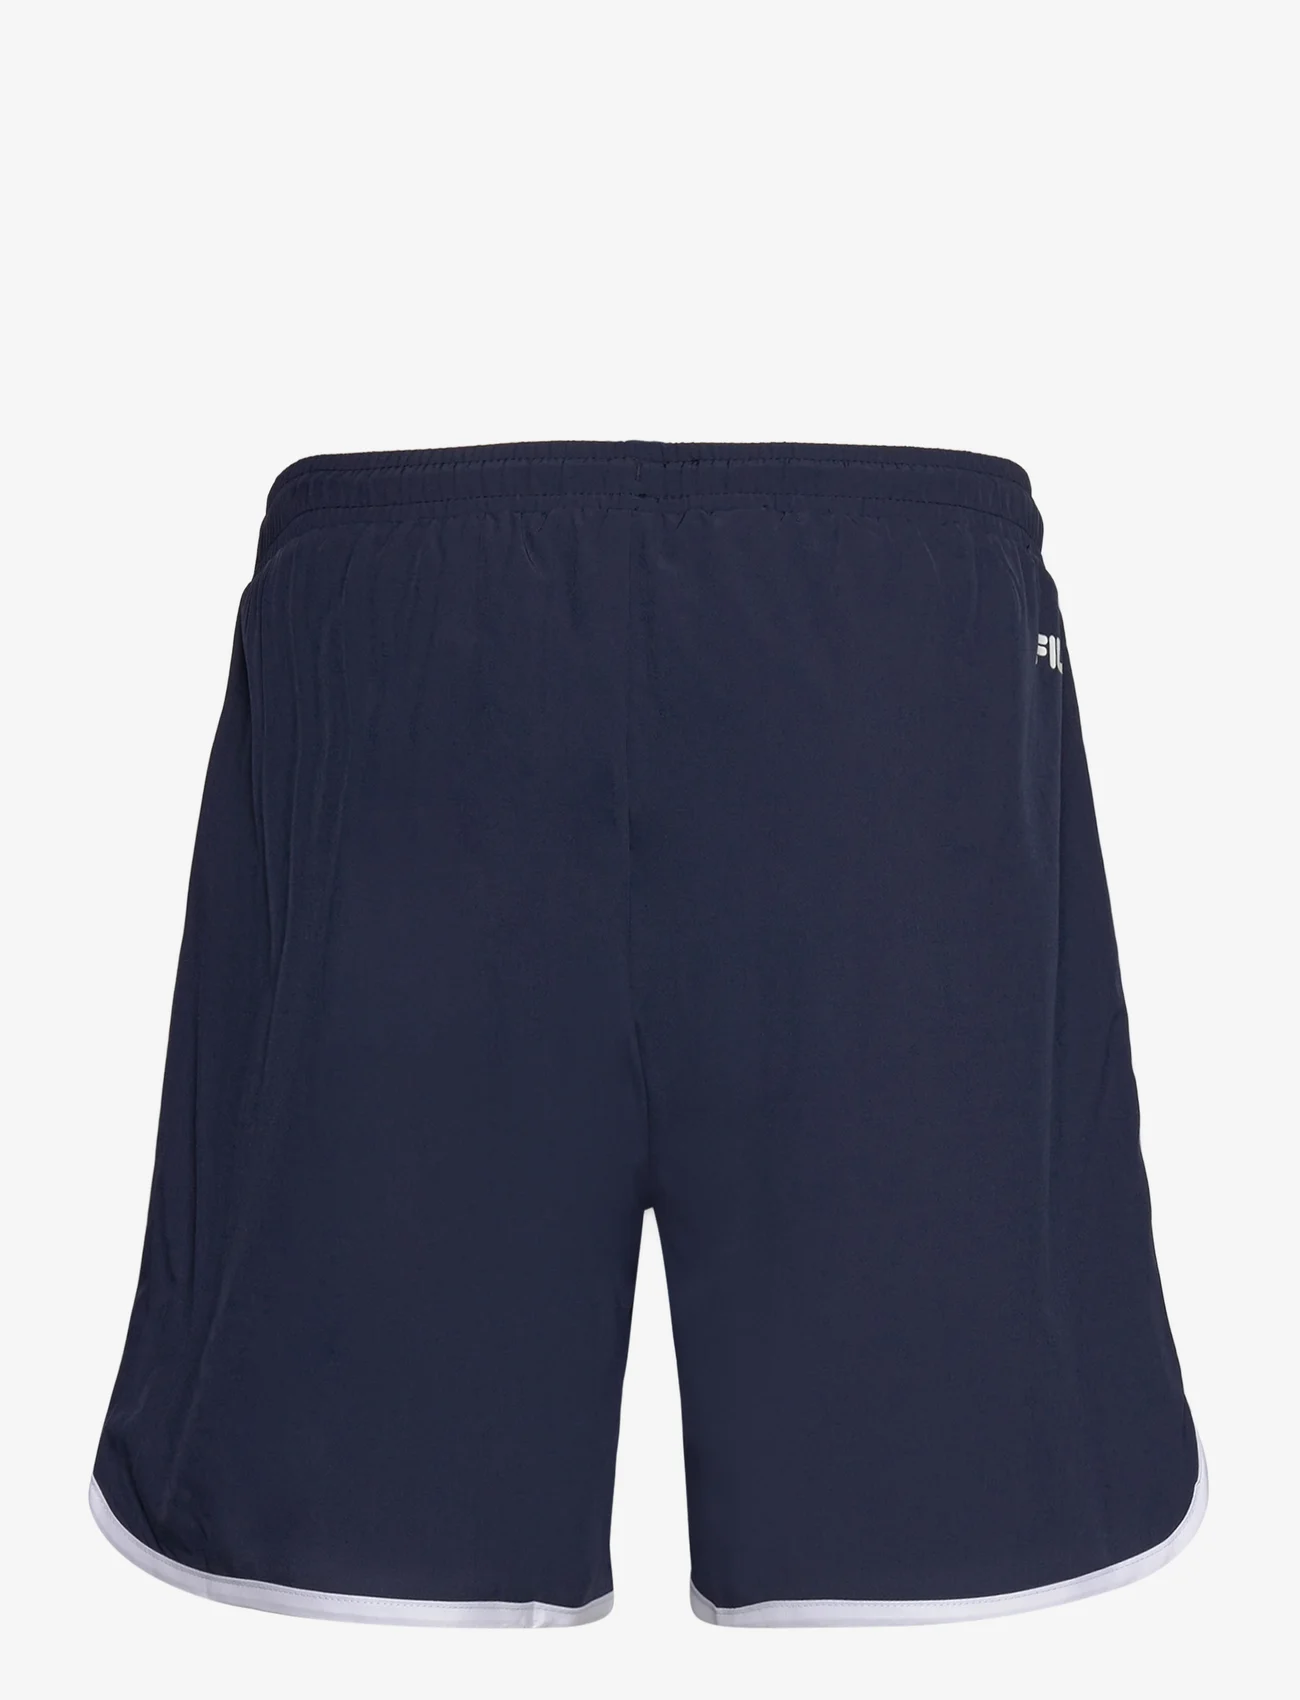 FILA - SCILLA beach shorts - badeshorts - black iris - 1